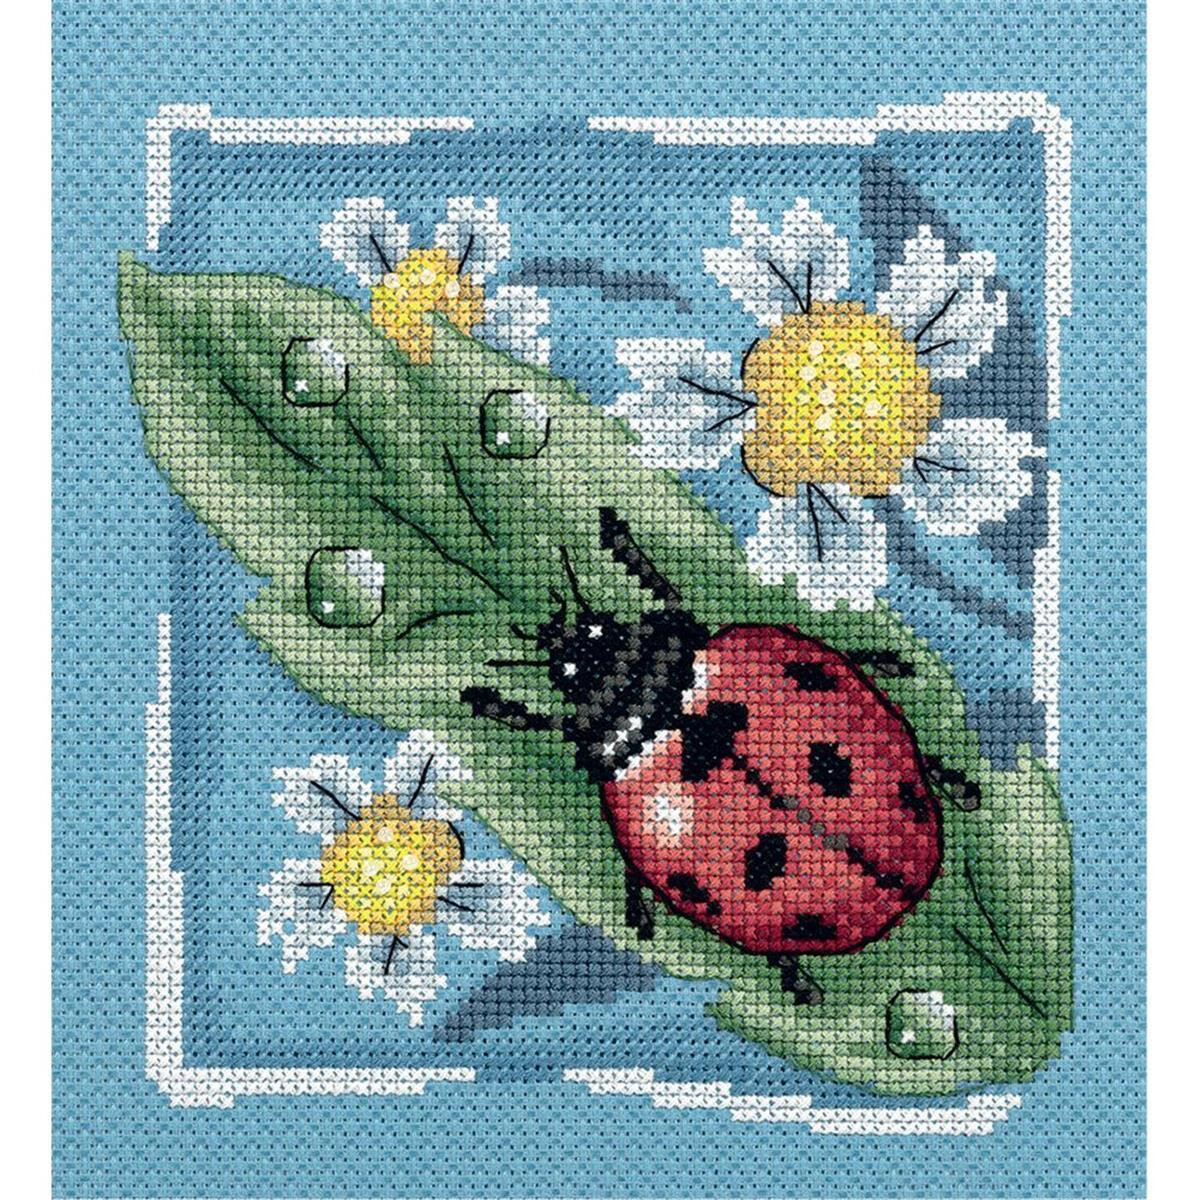 Panna counted cross stitch kit "Ladybird"...